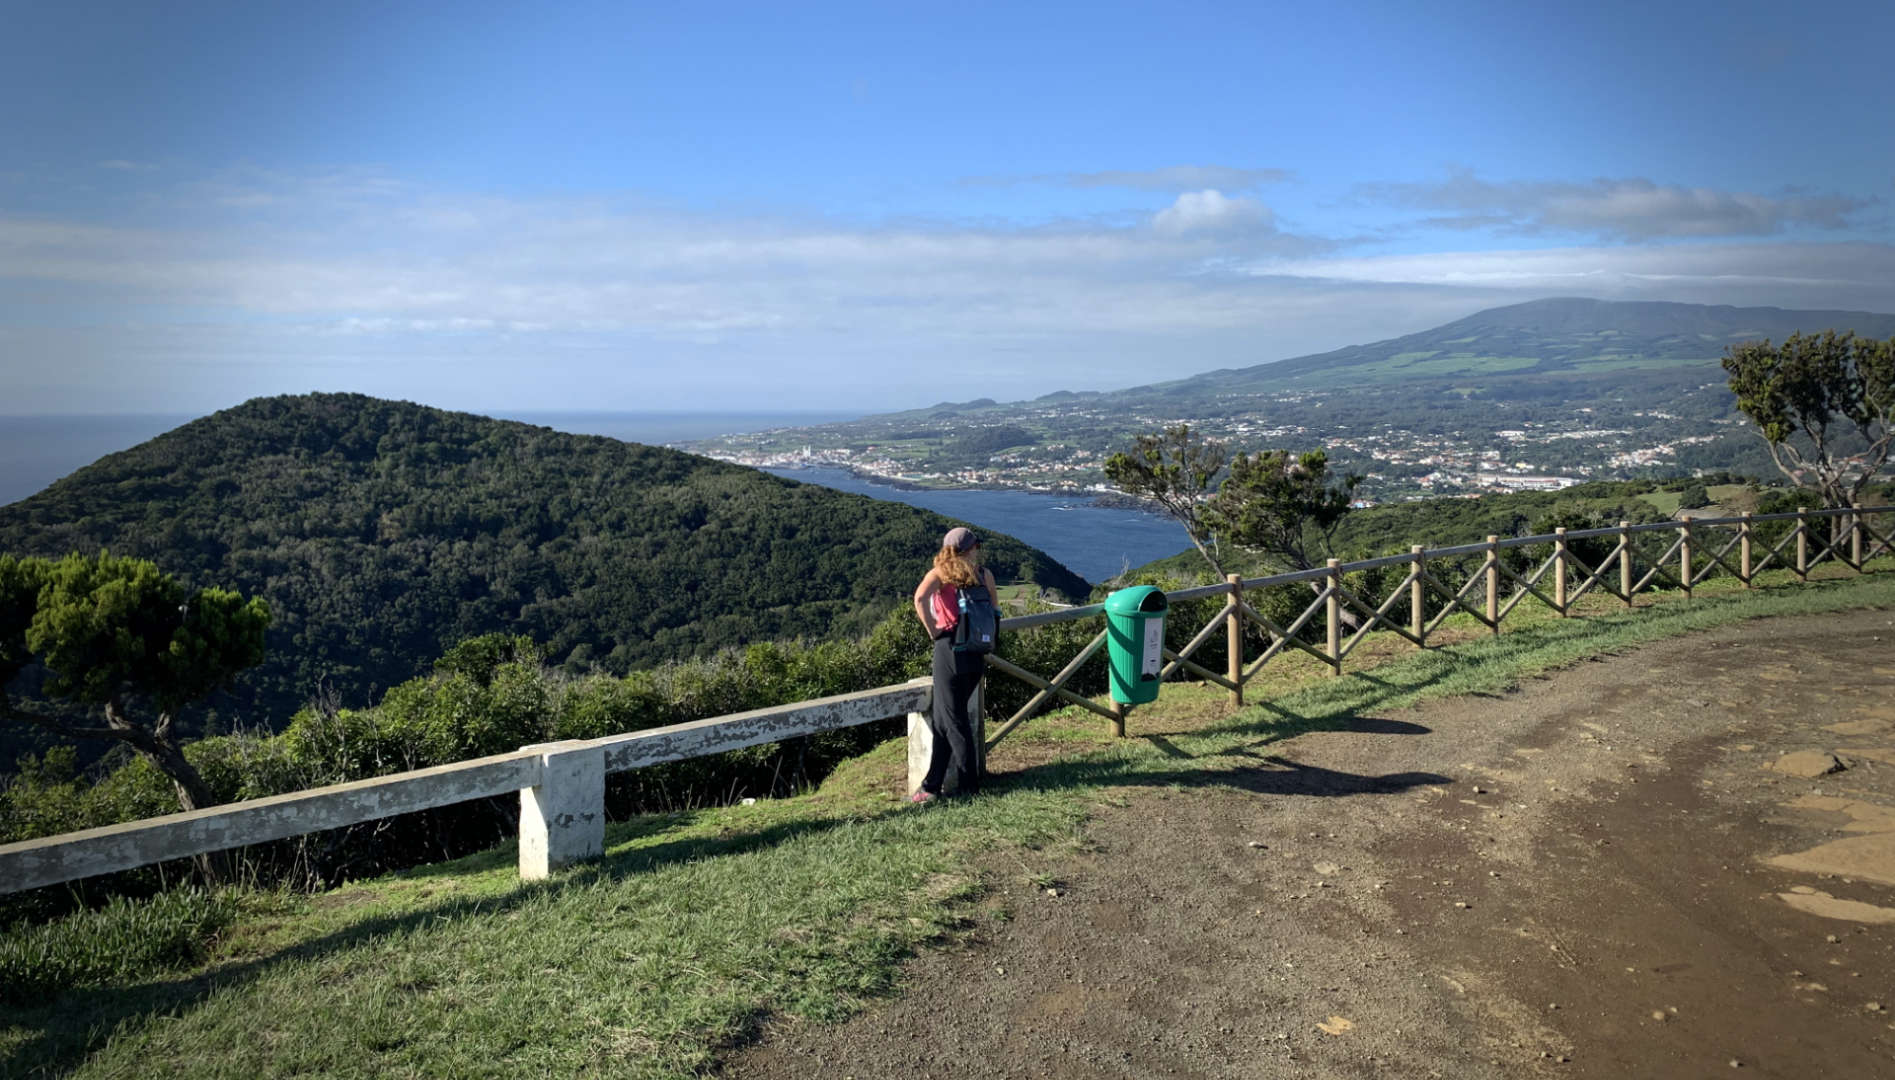 Jenni taking it in the views across Terceira.